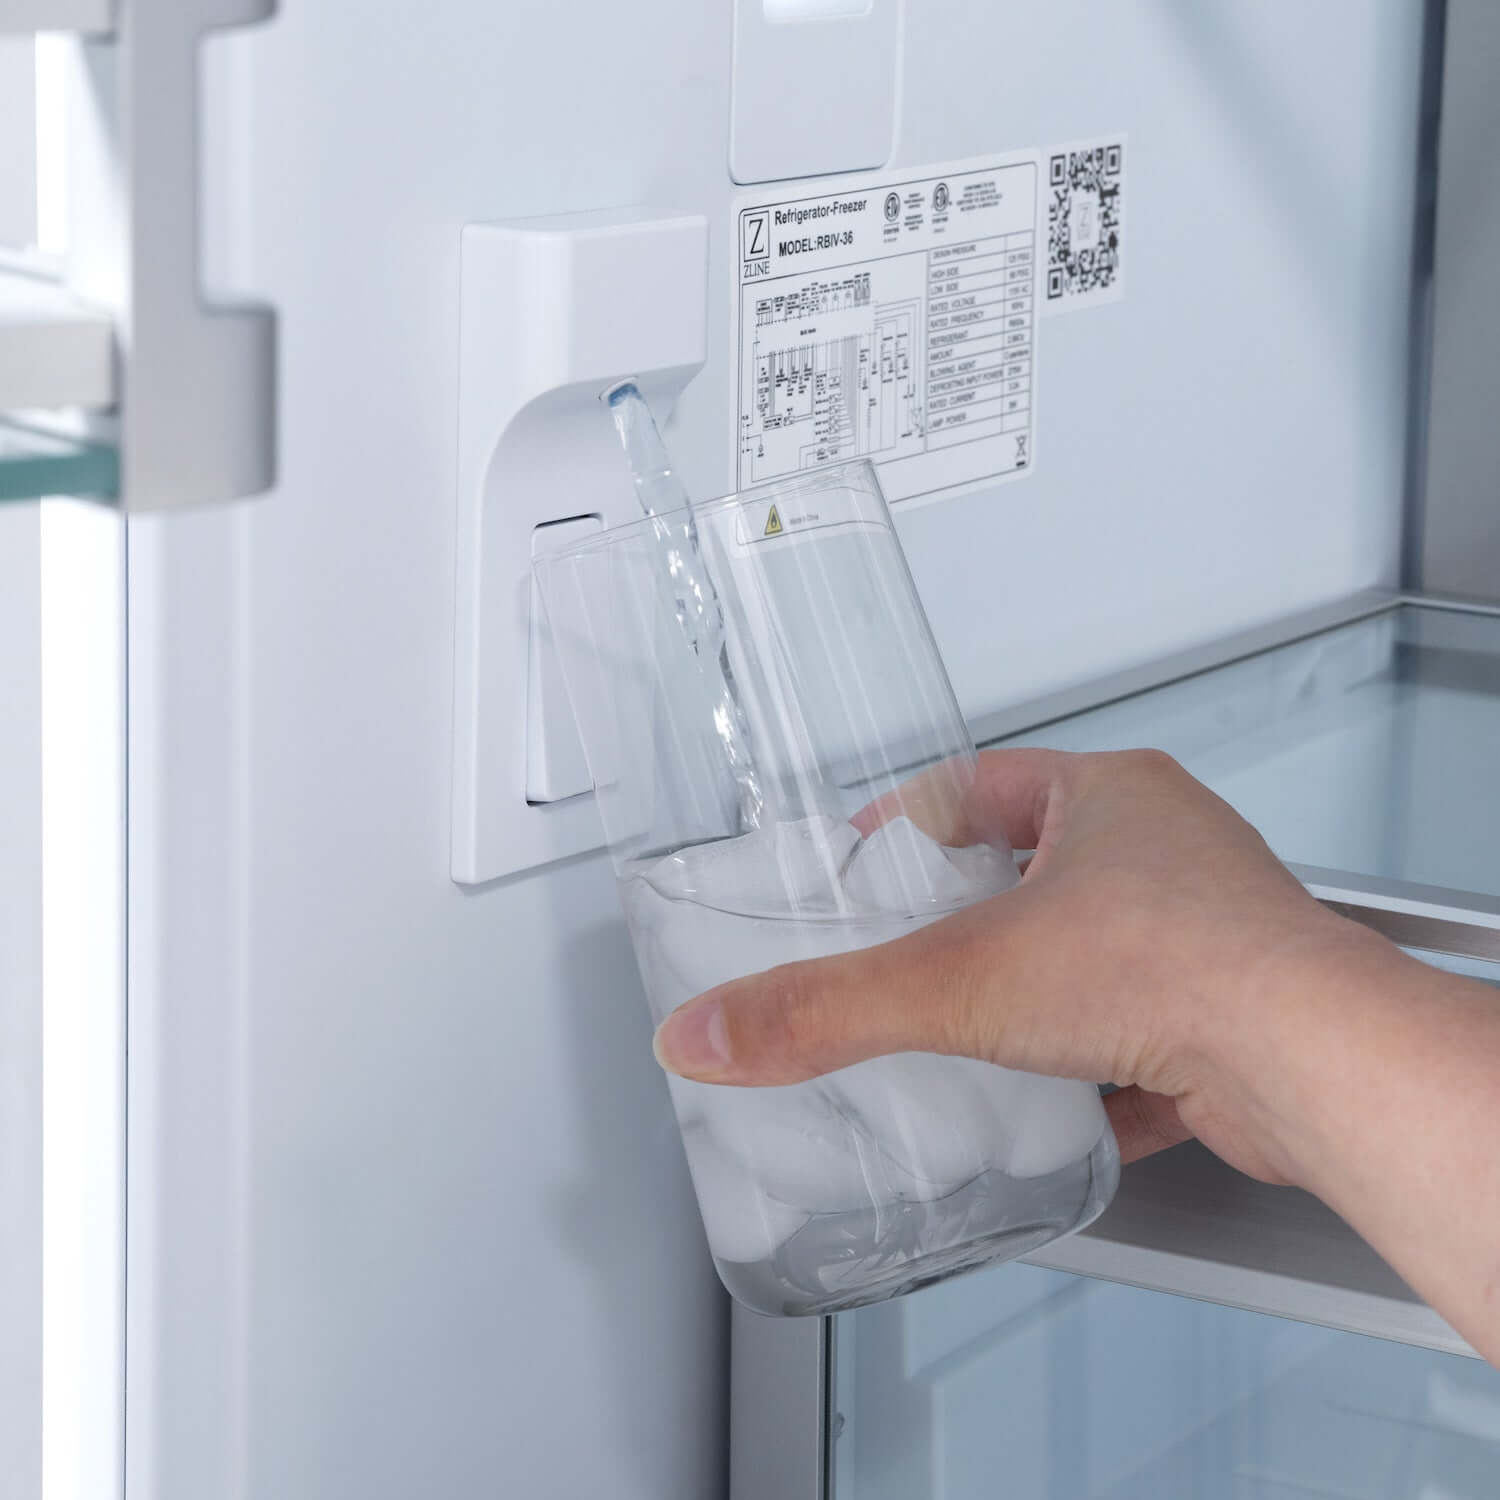 Internal water dispenser on ZLINE built-in refrigerator.